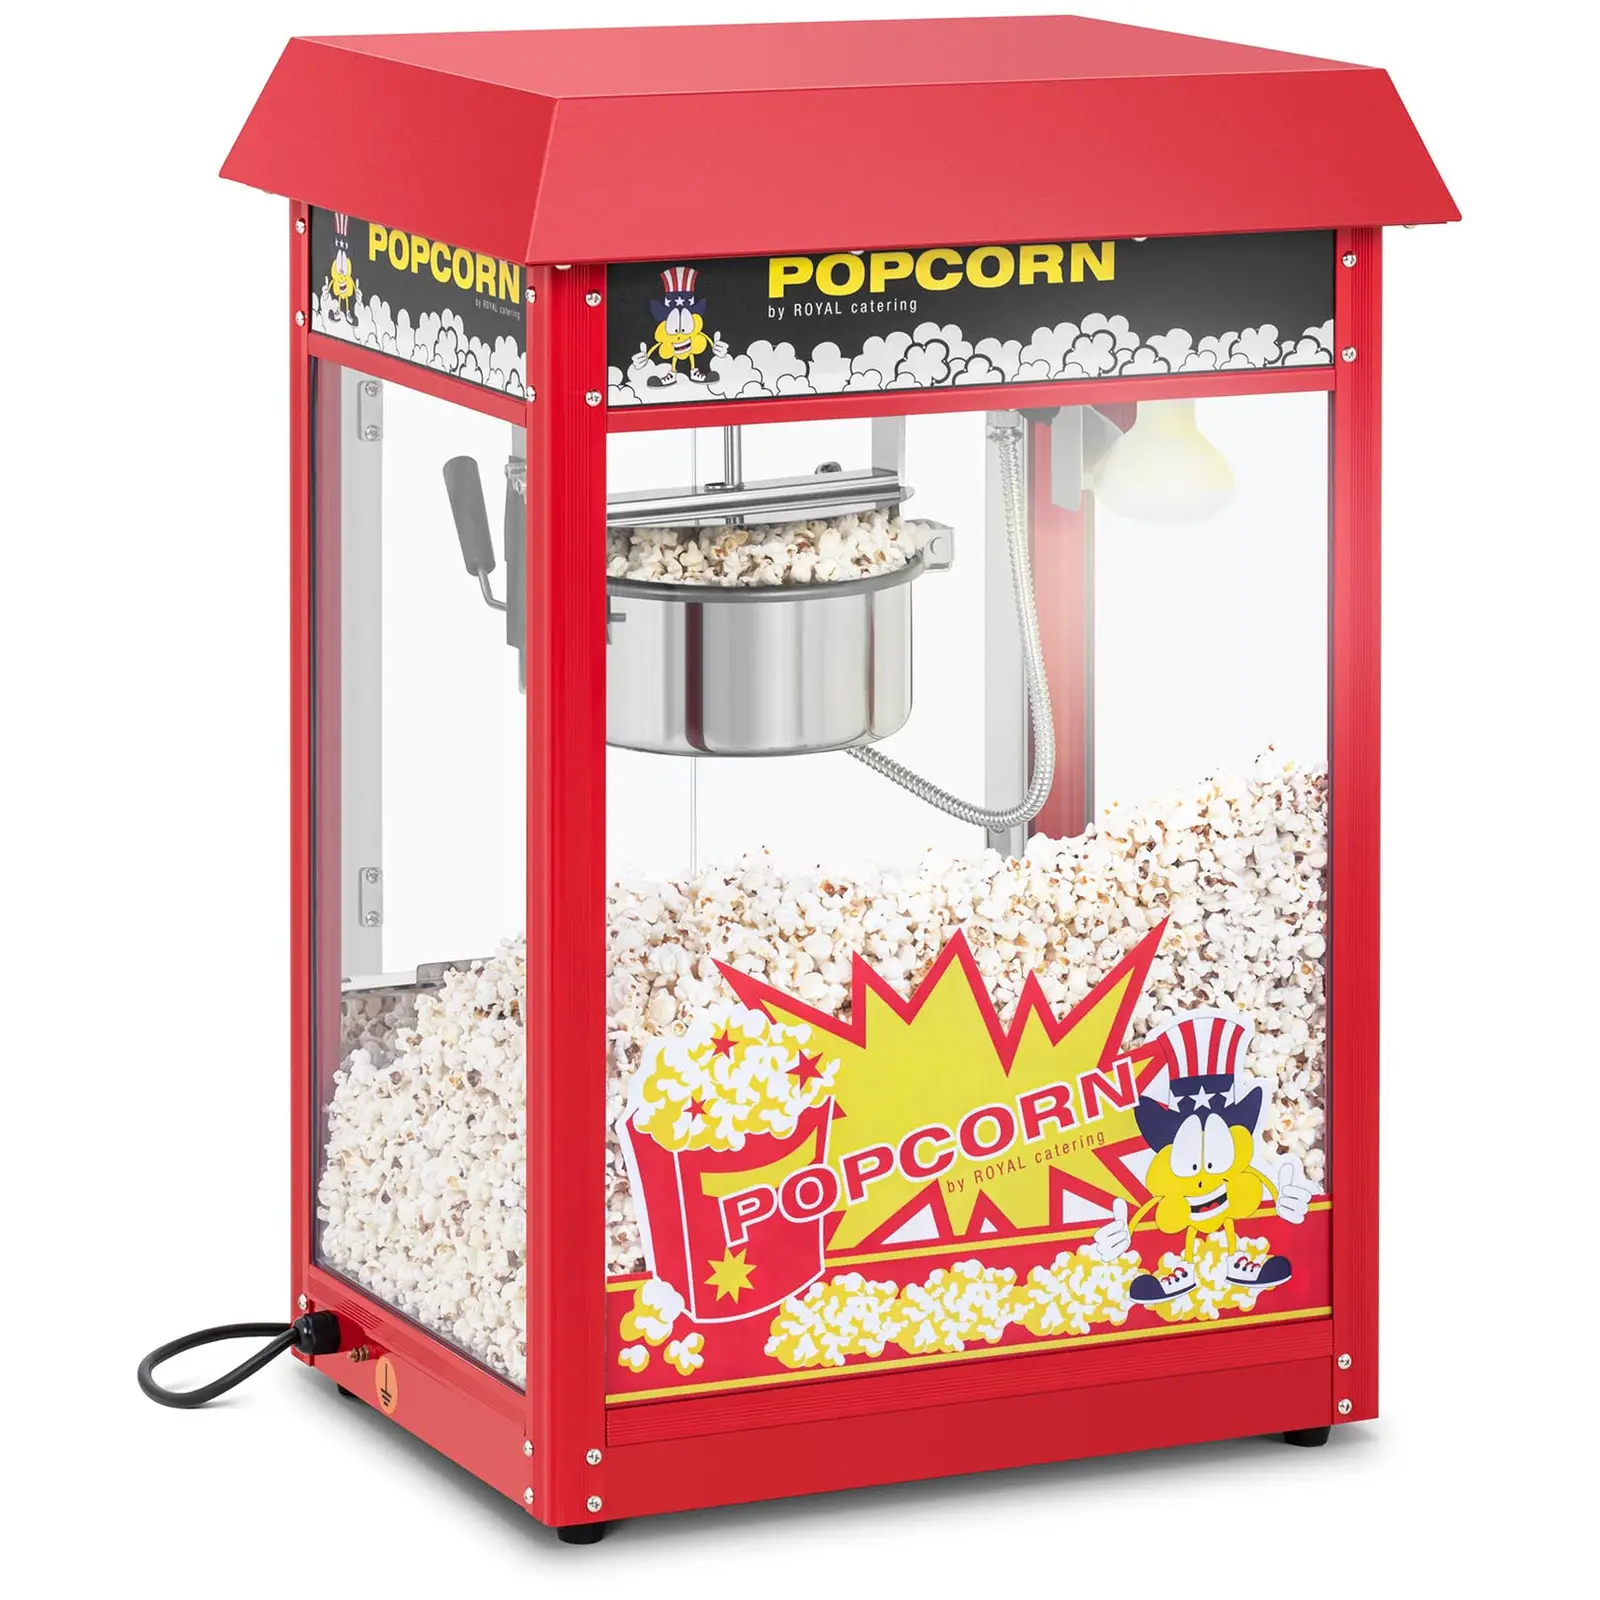 Popcorn-kone - retrotyyli - 150 / 180 °C - punainen - Royal Catering